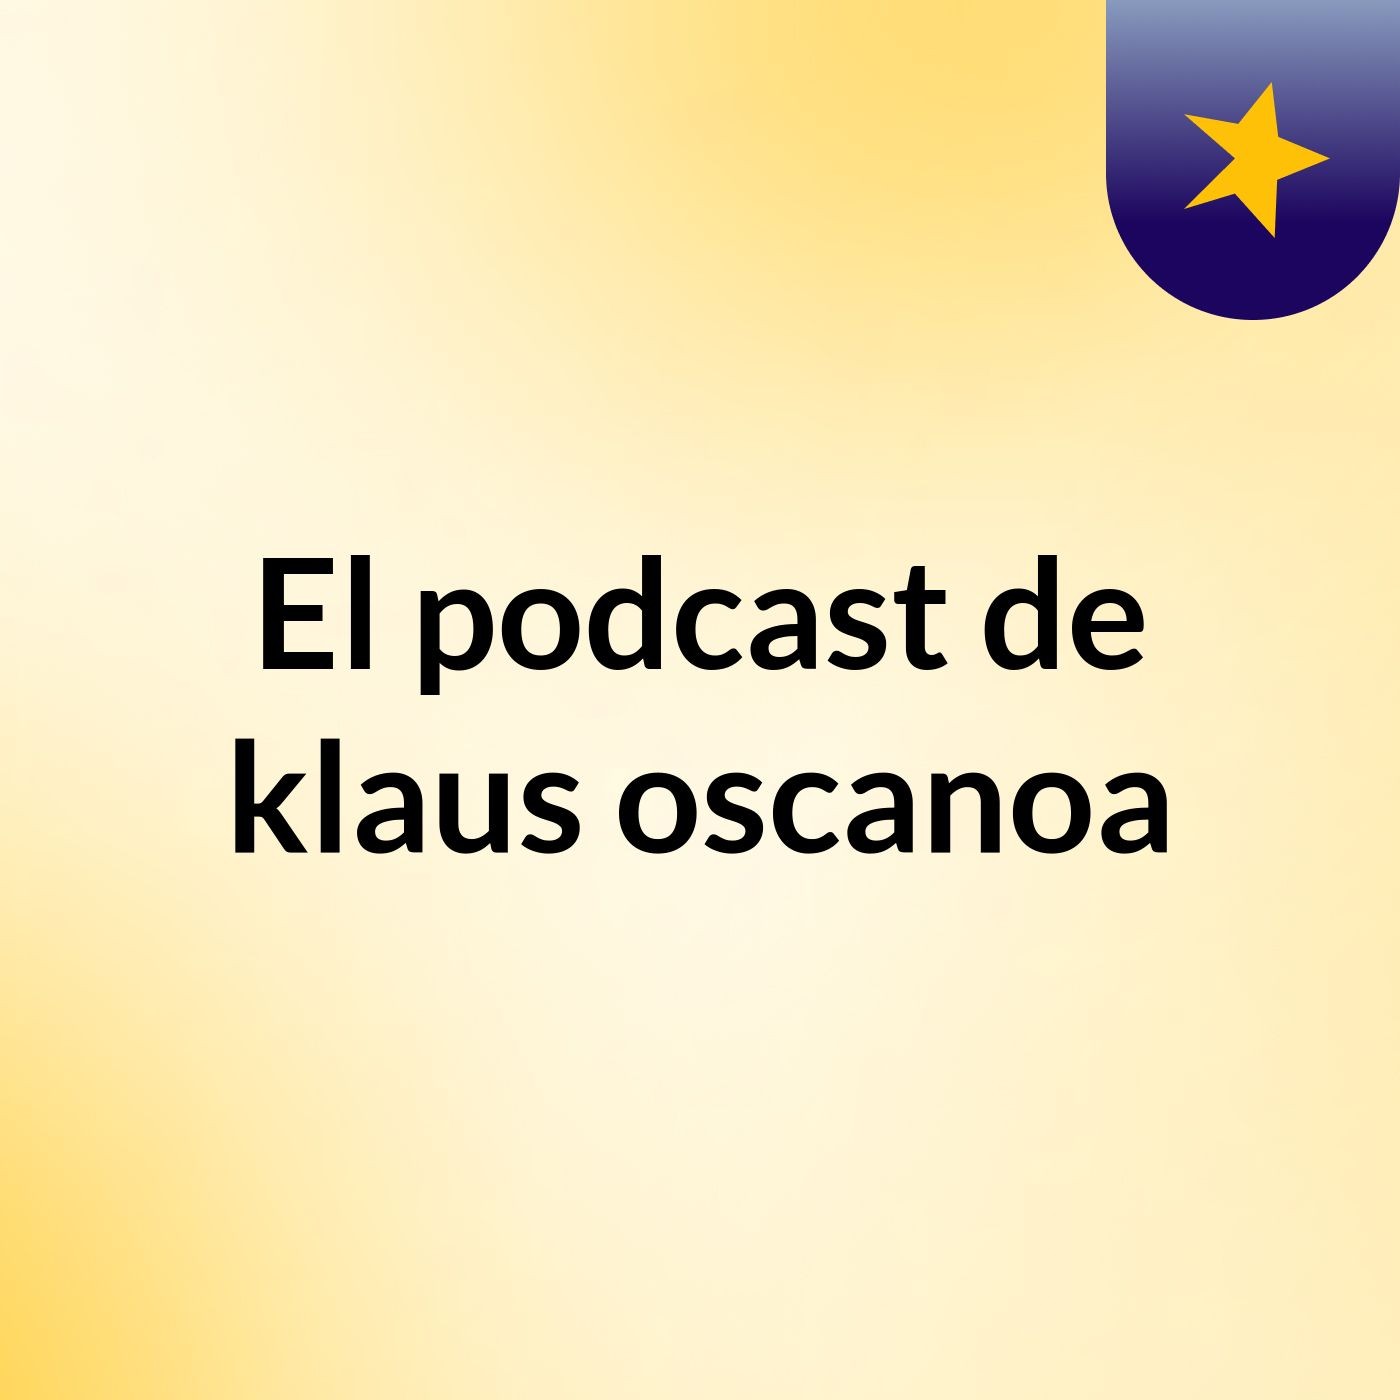 Episodio 7 - El podcast de klaus oscanoa